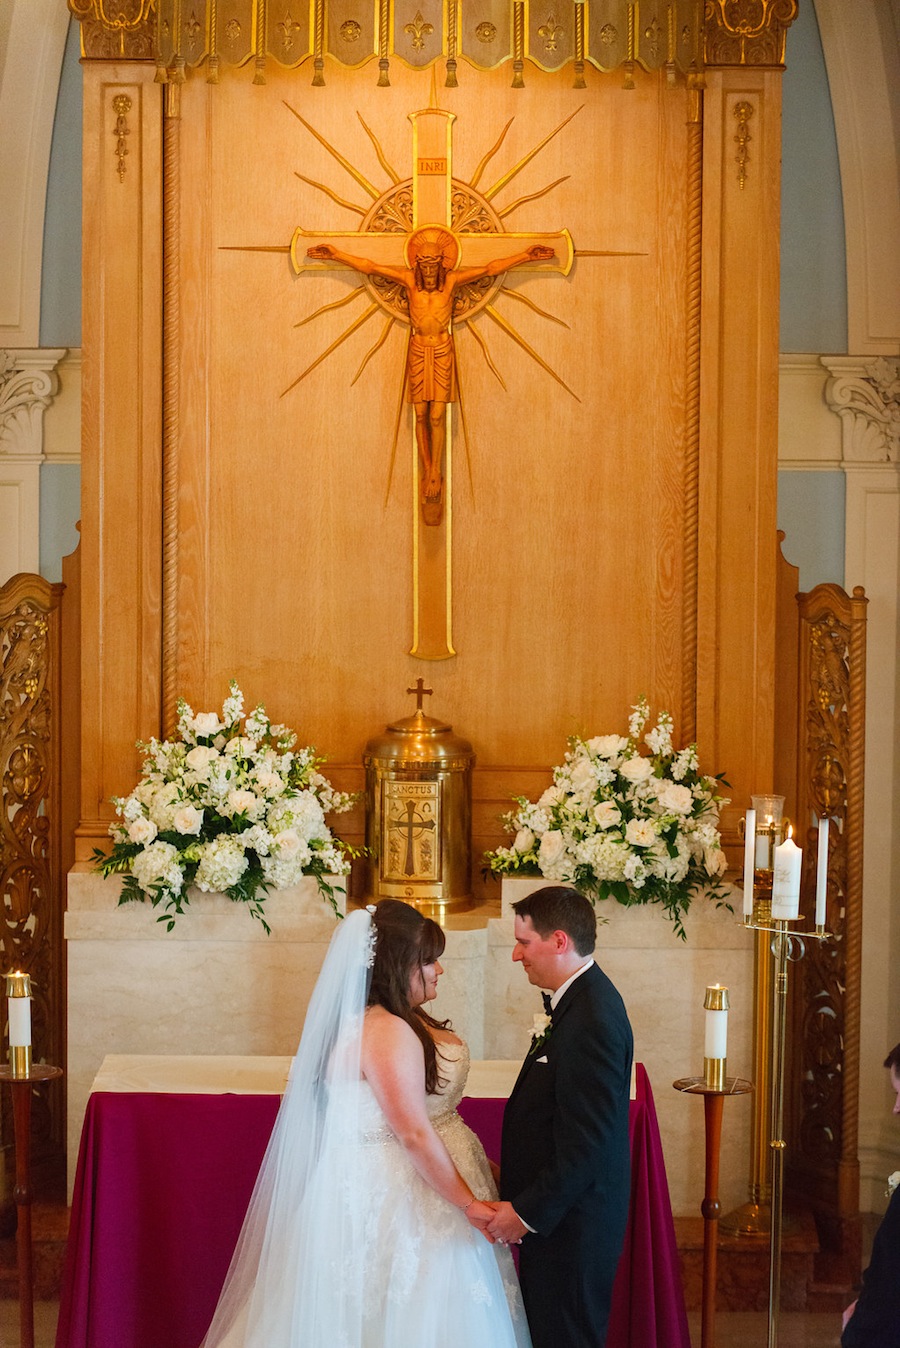 Academy of Holy Names Wedding | S. Tampa Wedding Ceremony